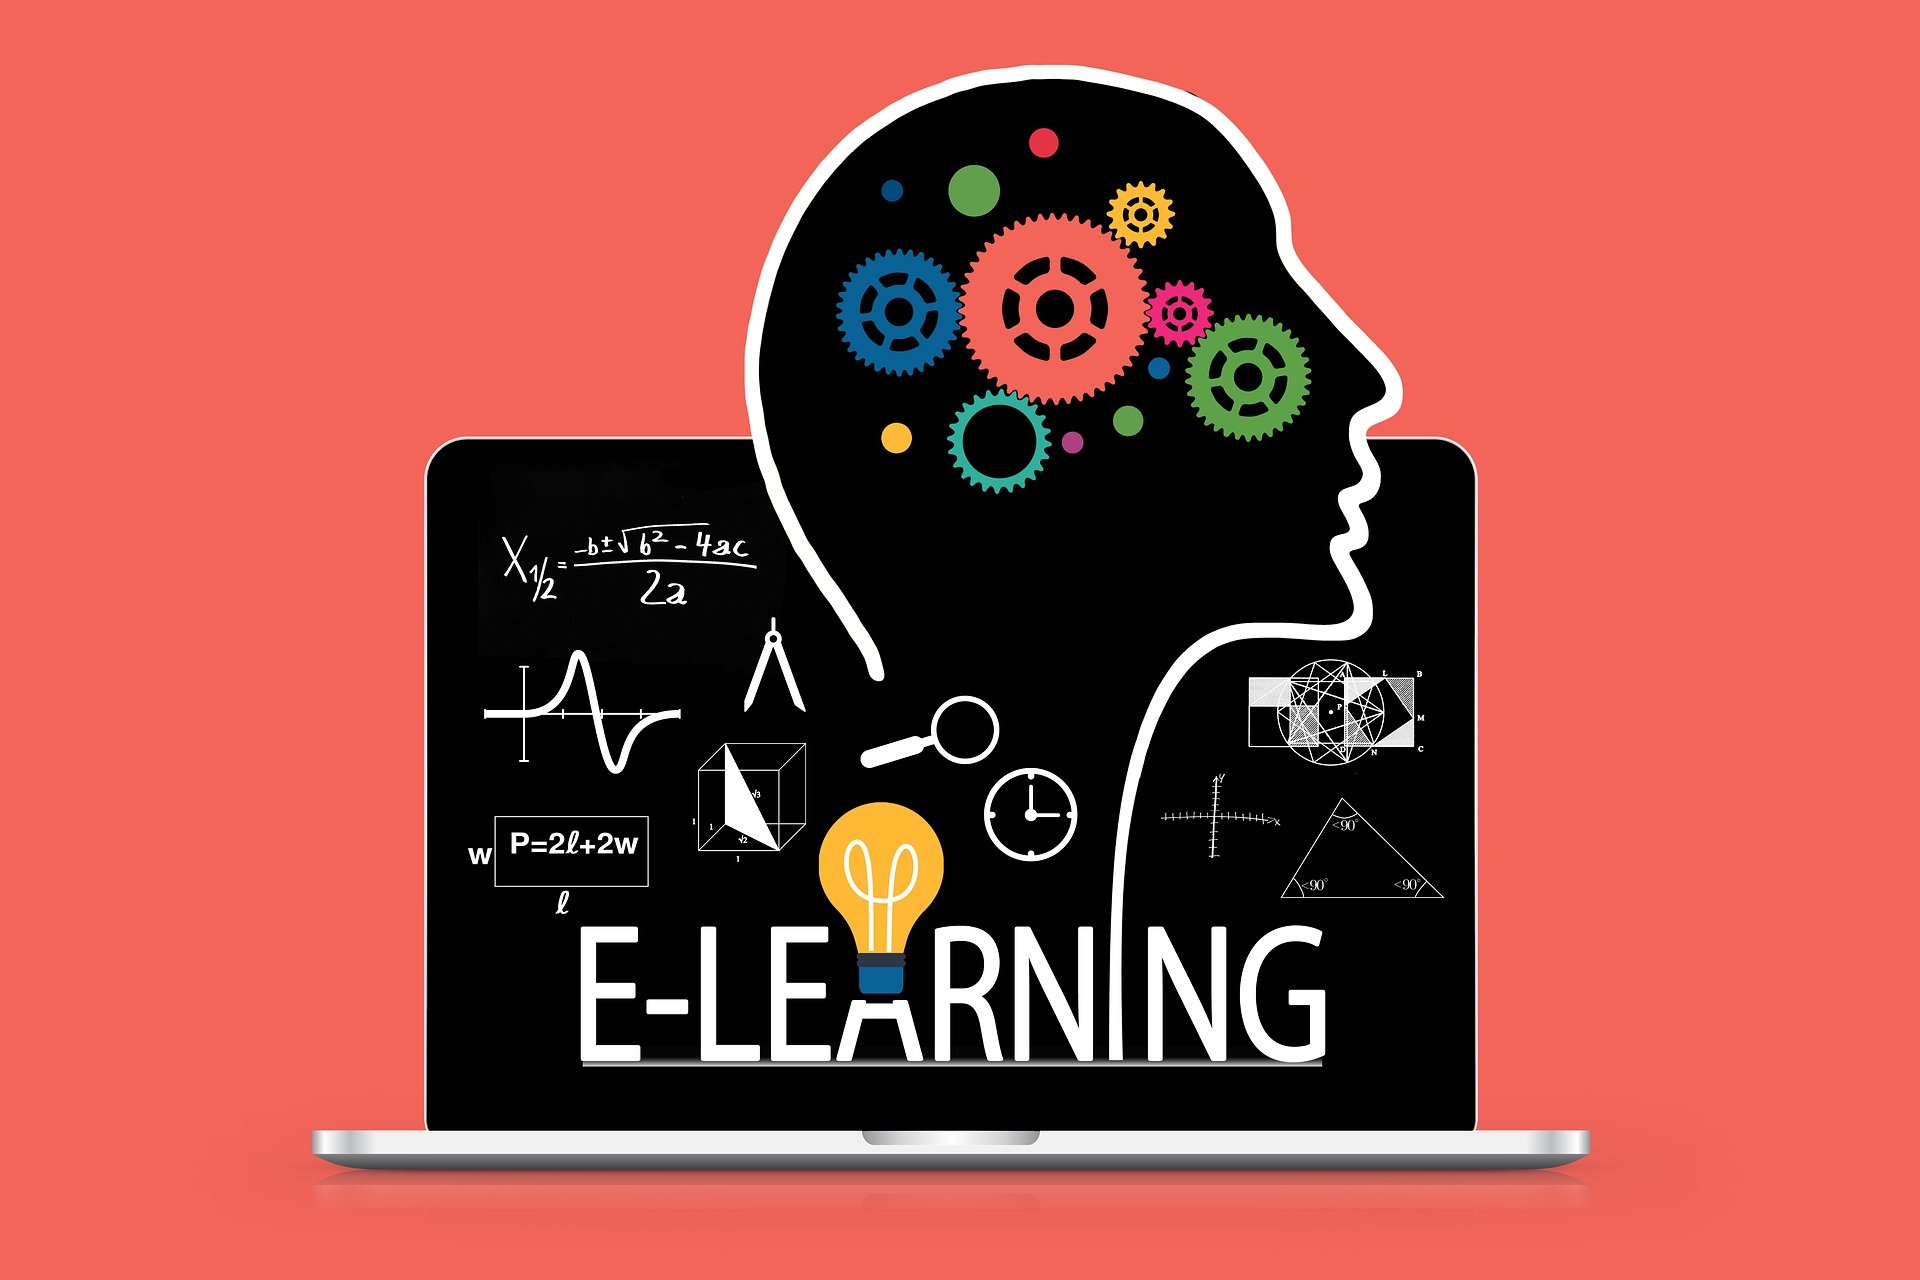 Informationen zum Anlegen von E-Learnings